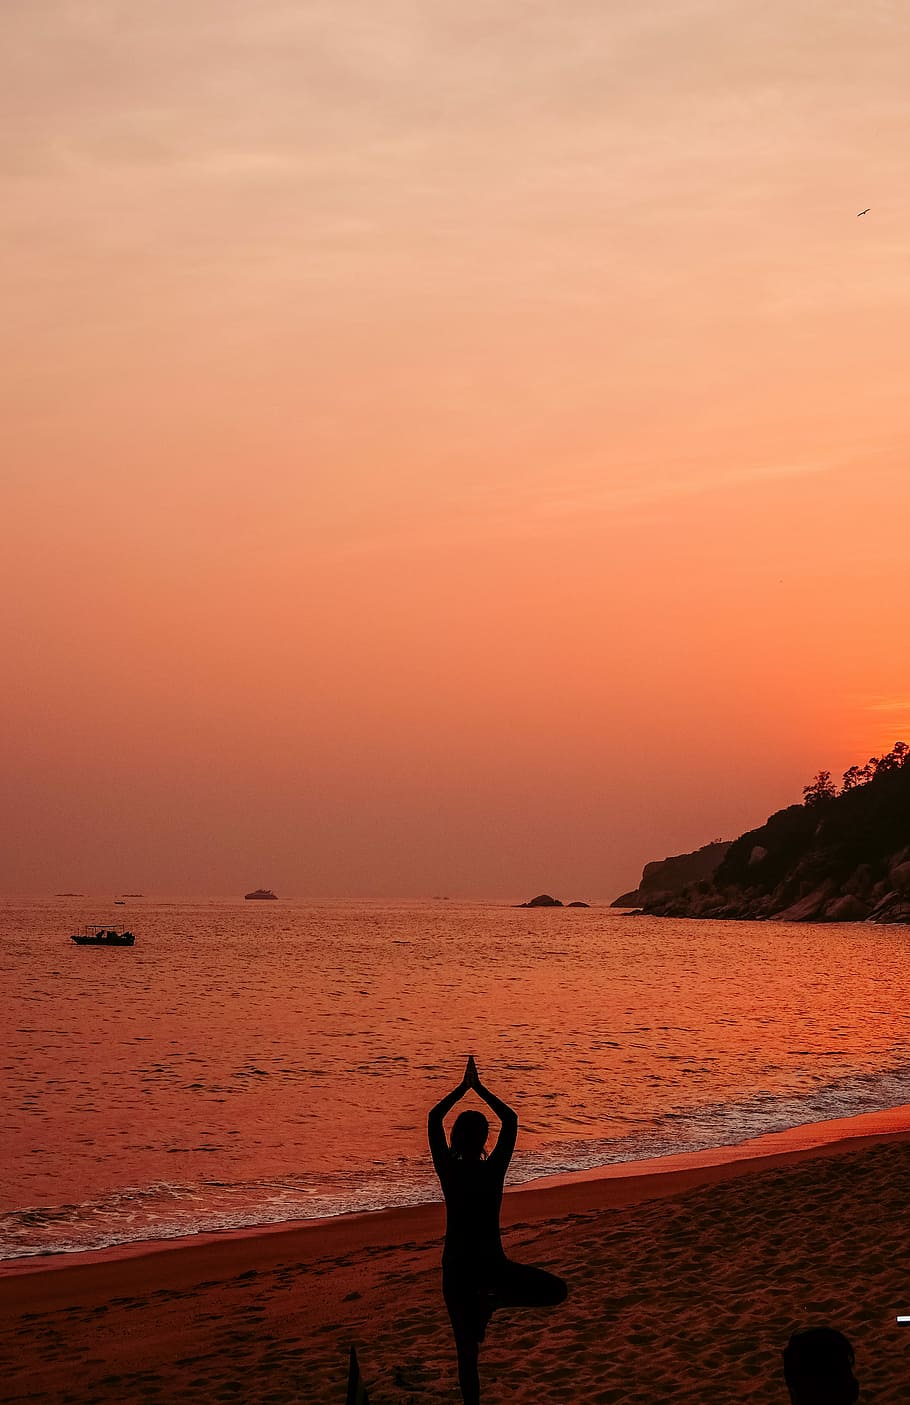 HD wallpaper: Namaste on the beach, silhouette photo of woman